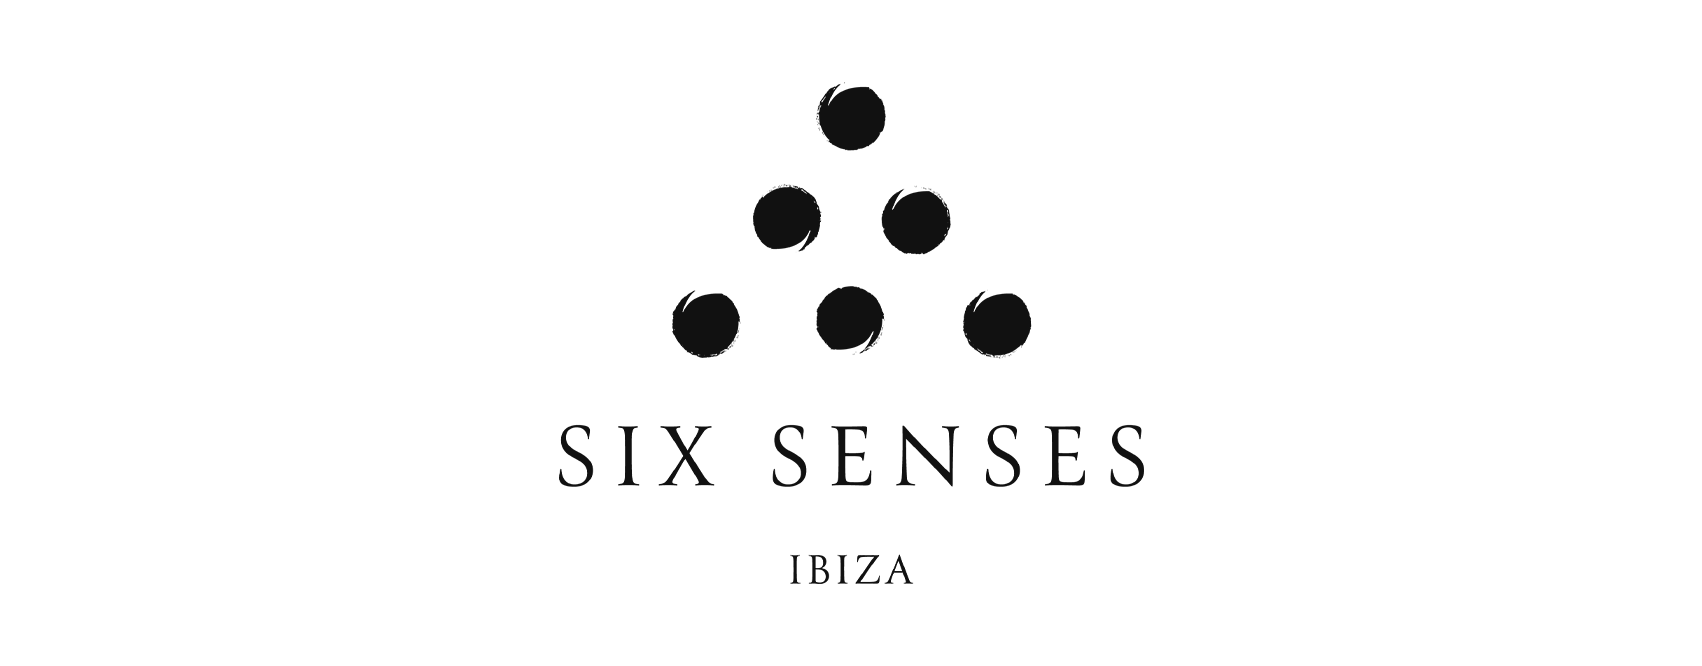 Six-Senses-2